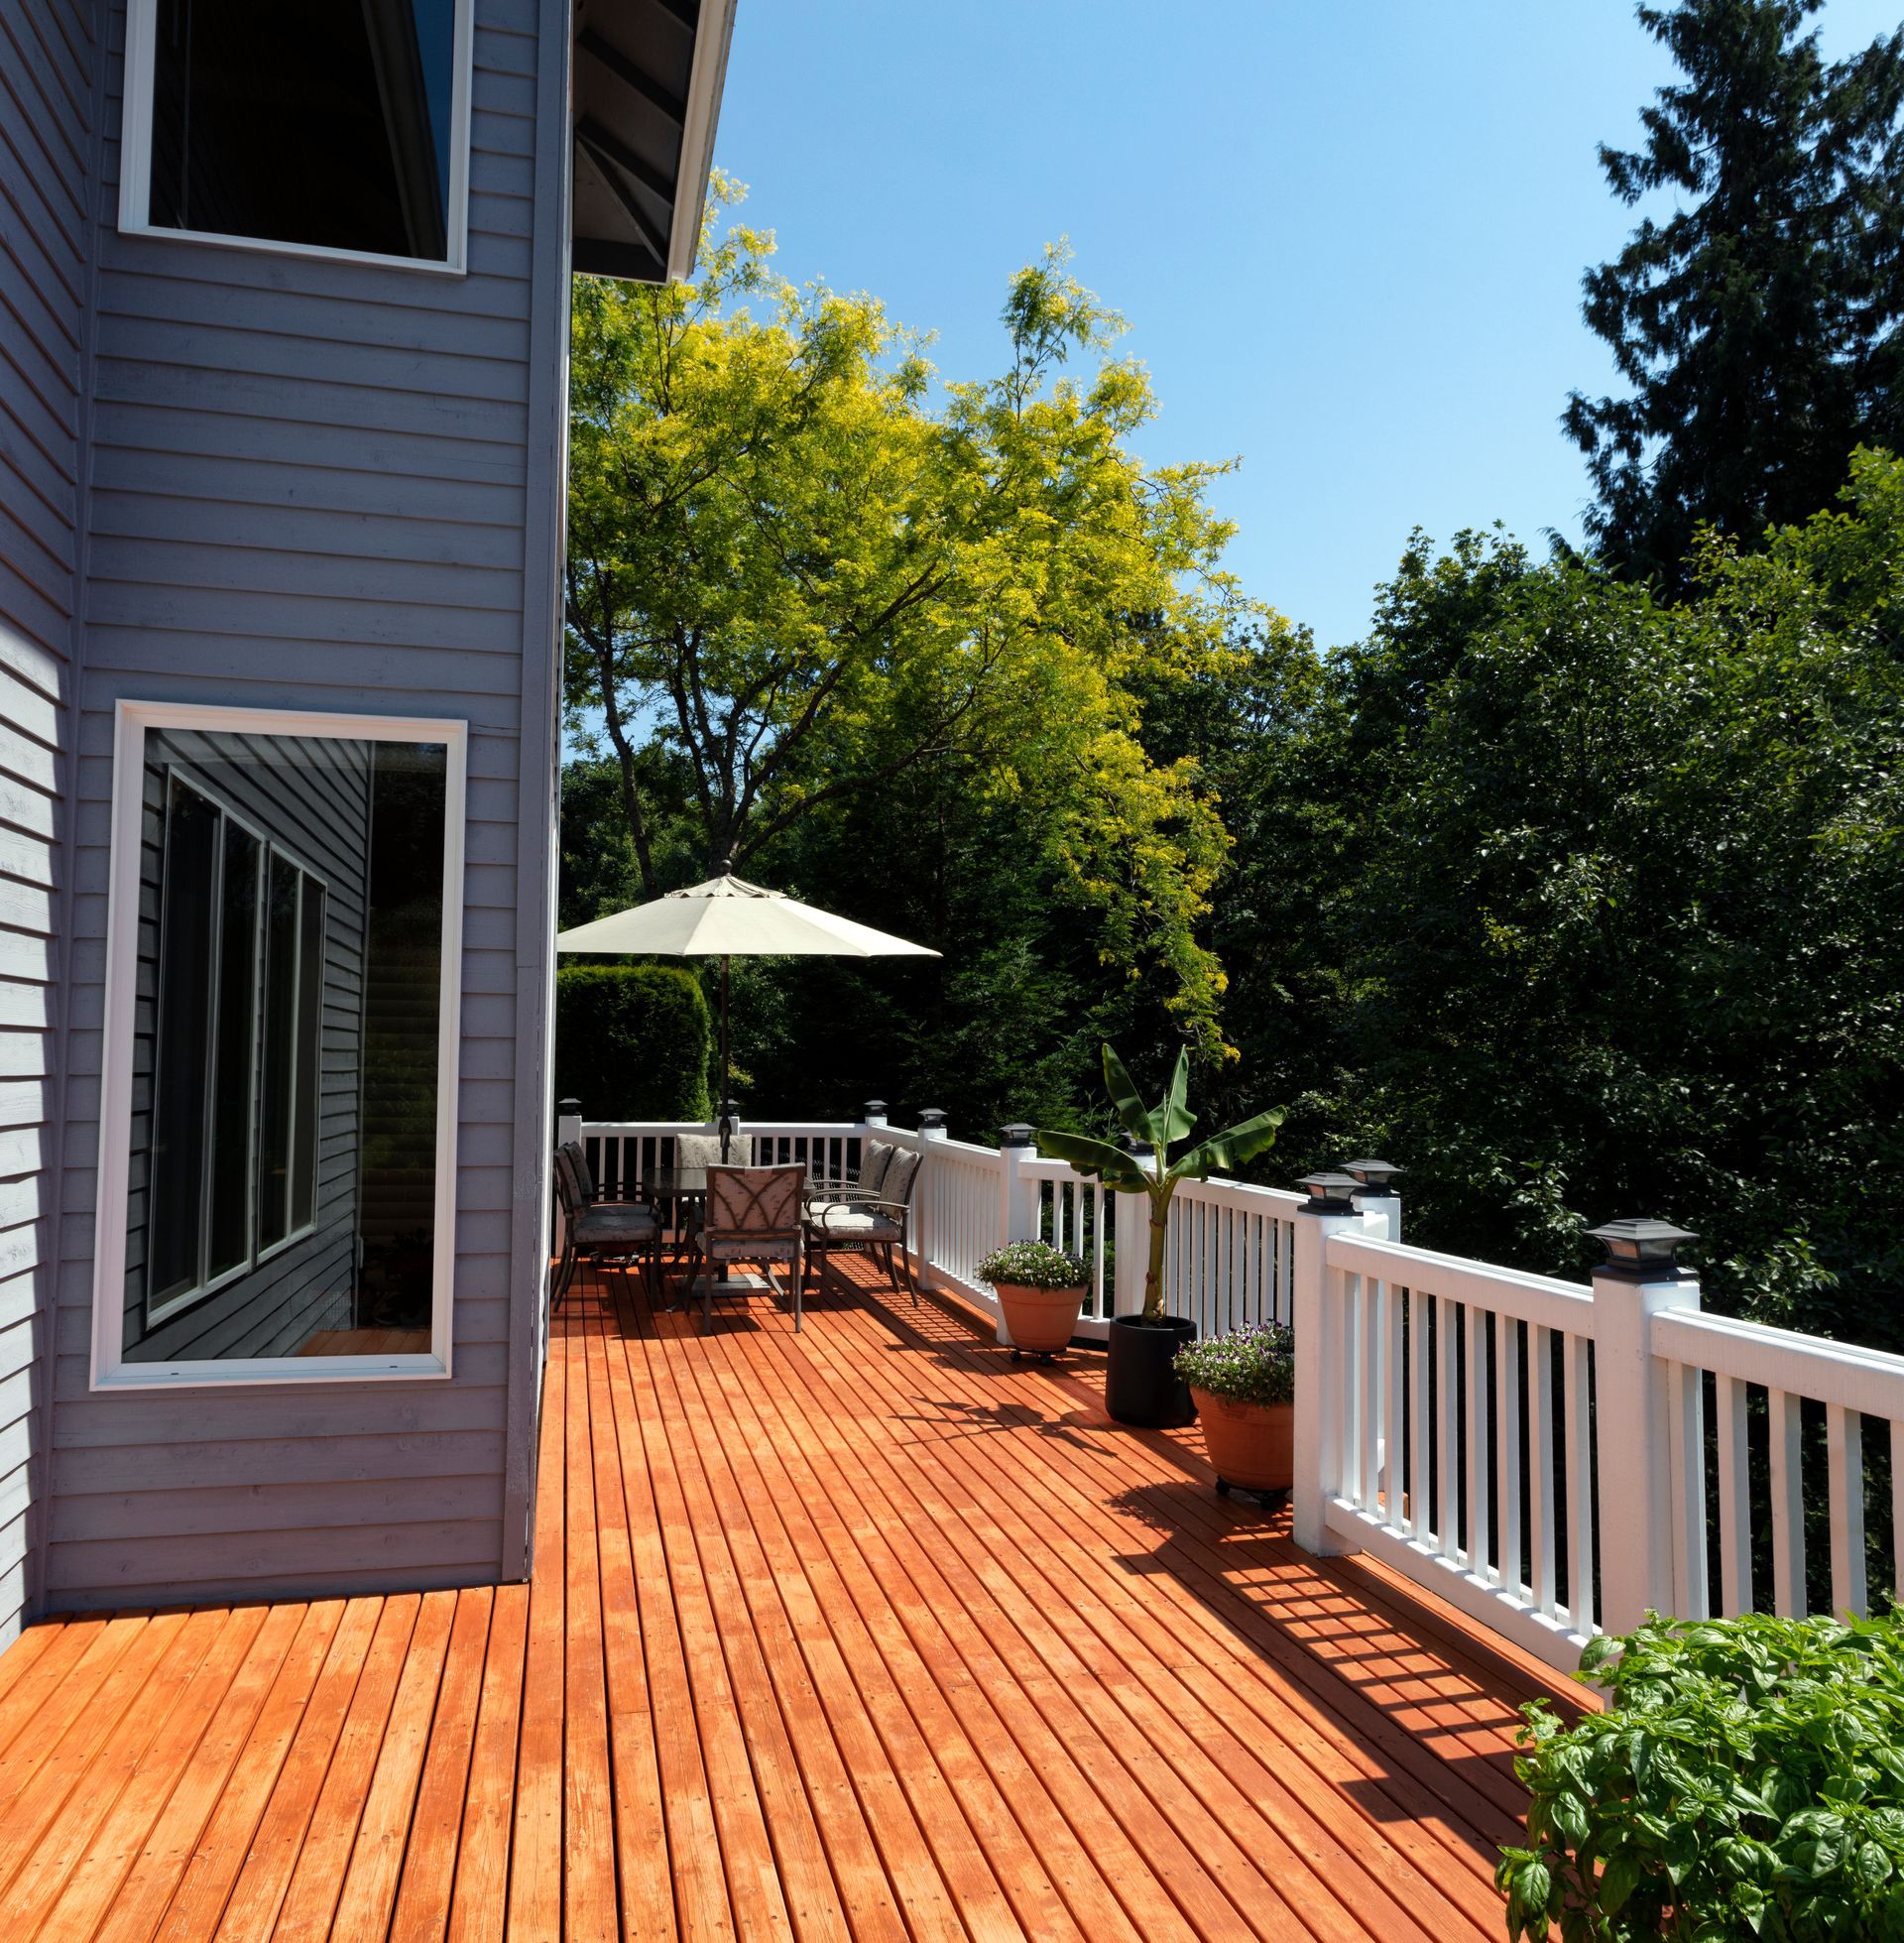 Terrasse en bois avec une barrière blanche